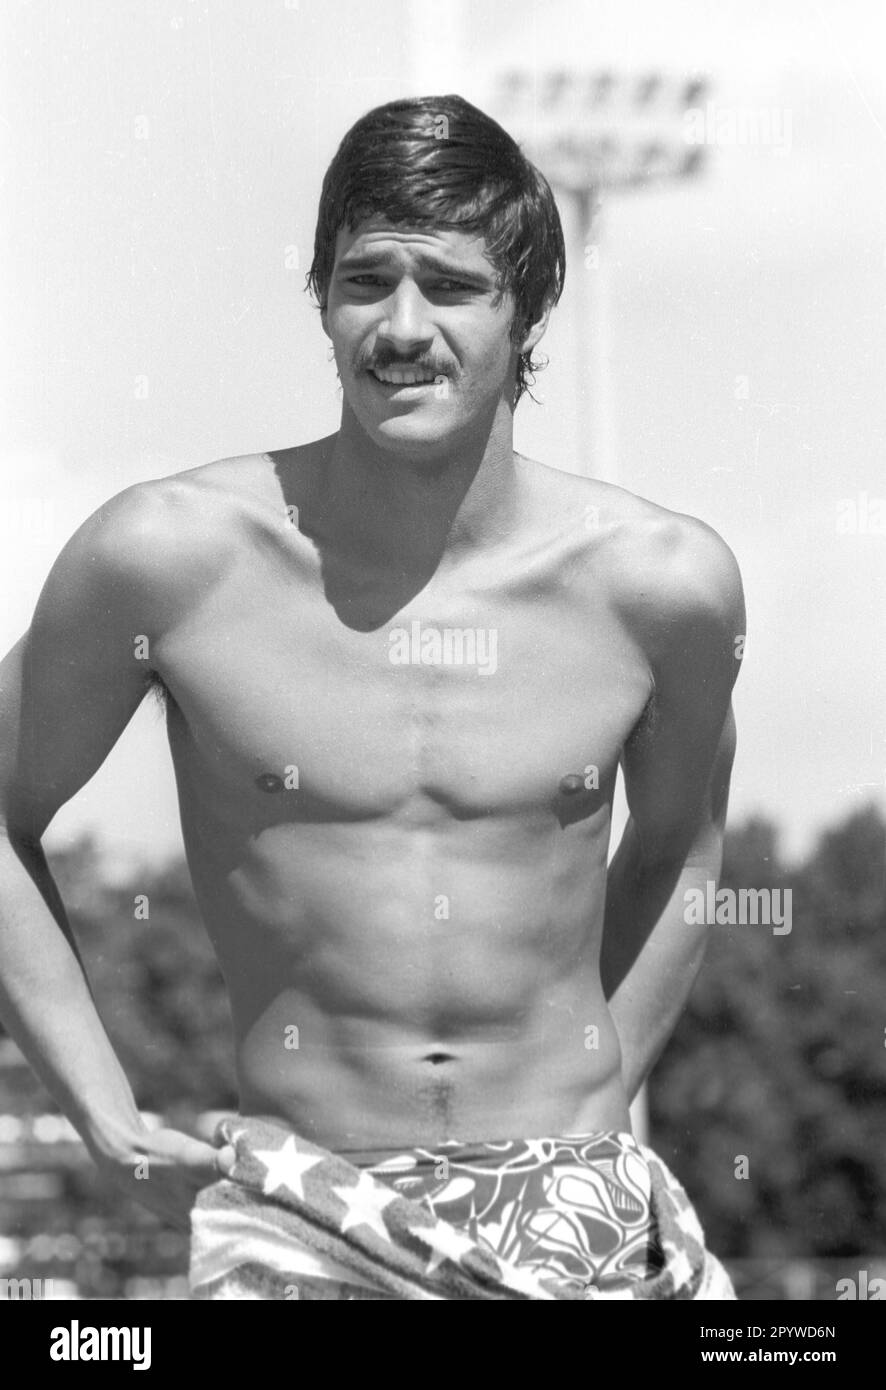 Olympic Games Munich 1972 / Swimming: Mark Spitz (USA), during training ...